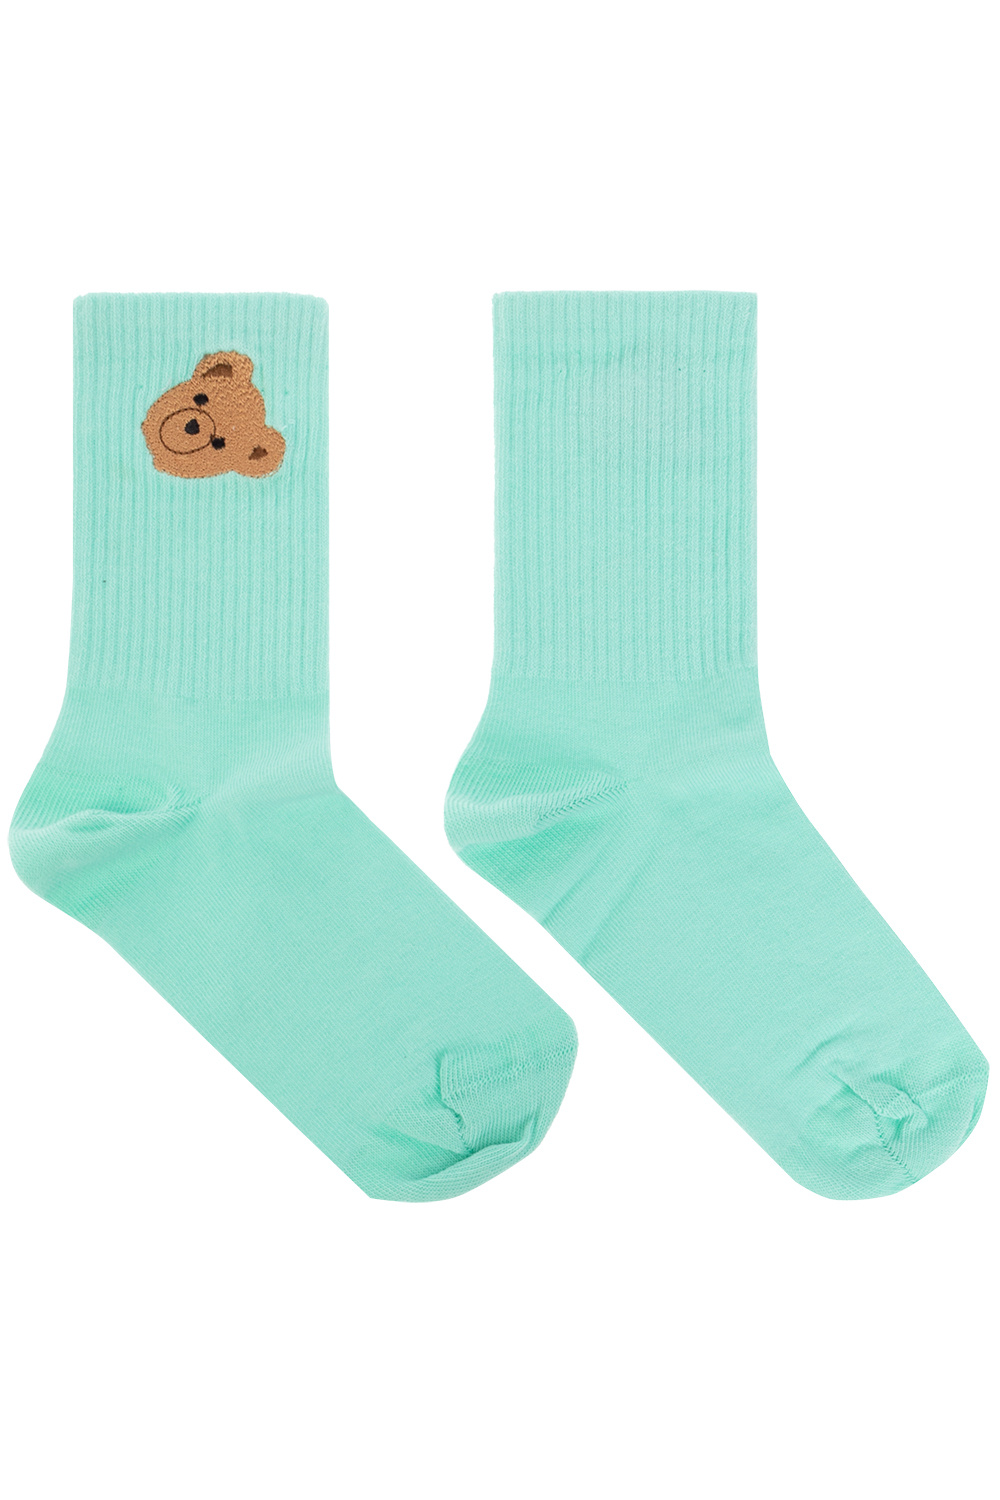 Palm Angels Kids Socks with teddy bear